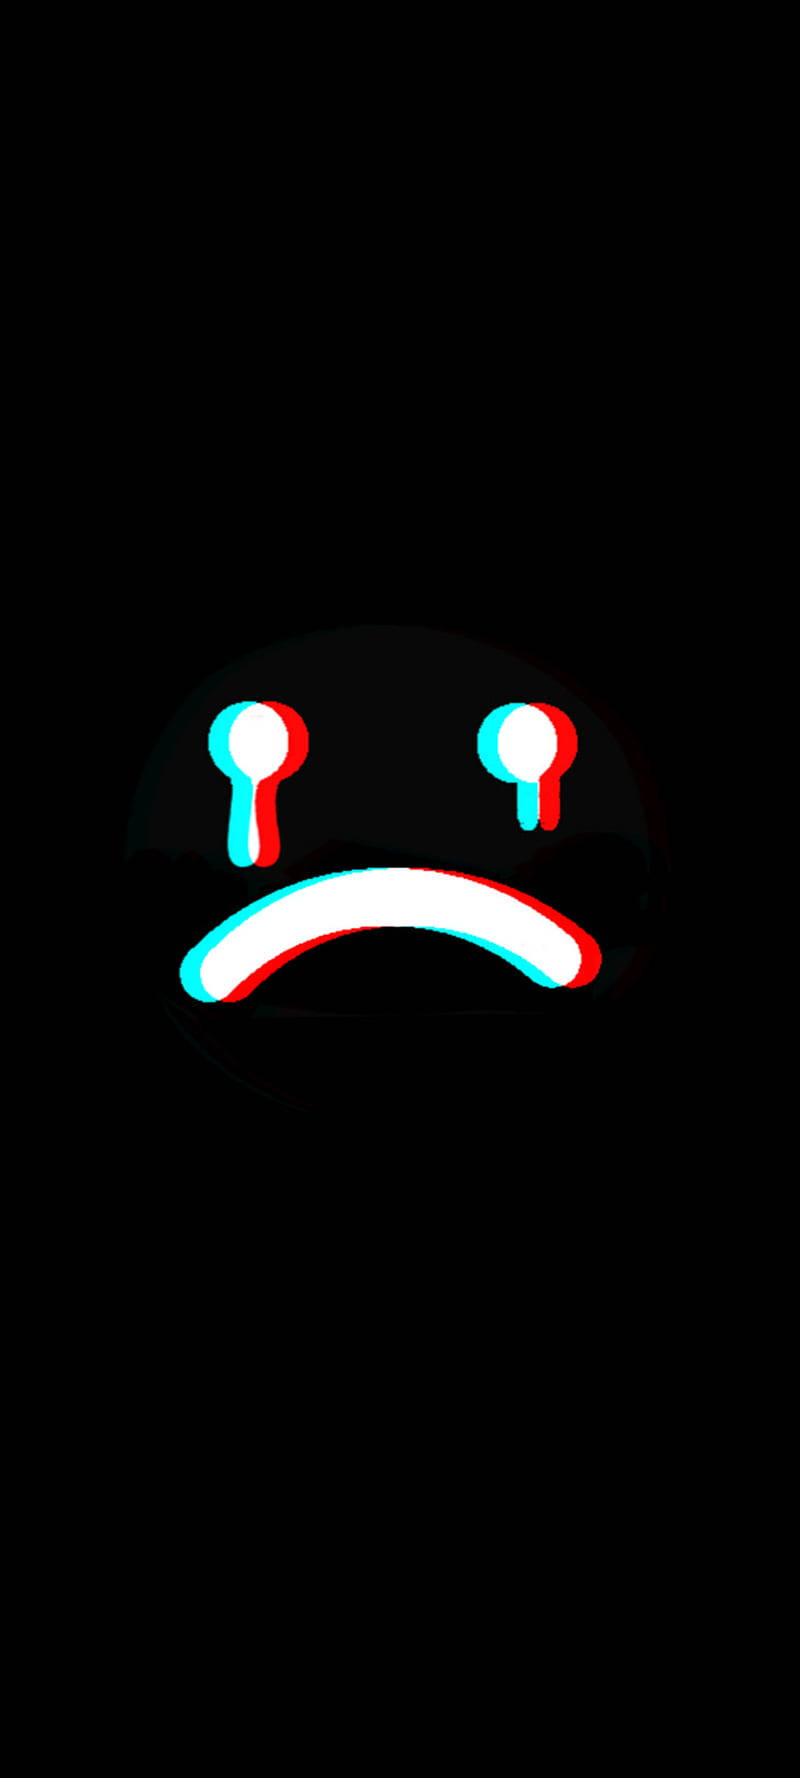 Sad Emoji Face With Tears Wallpaper